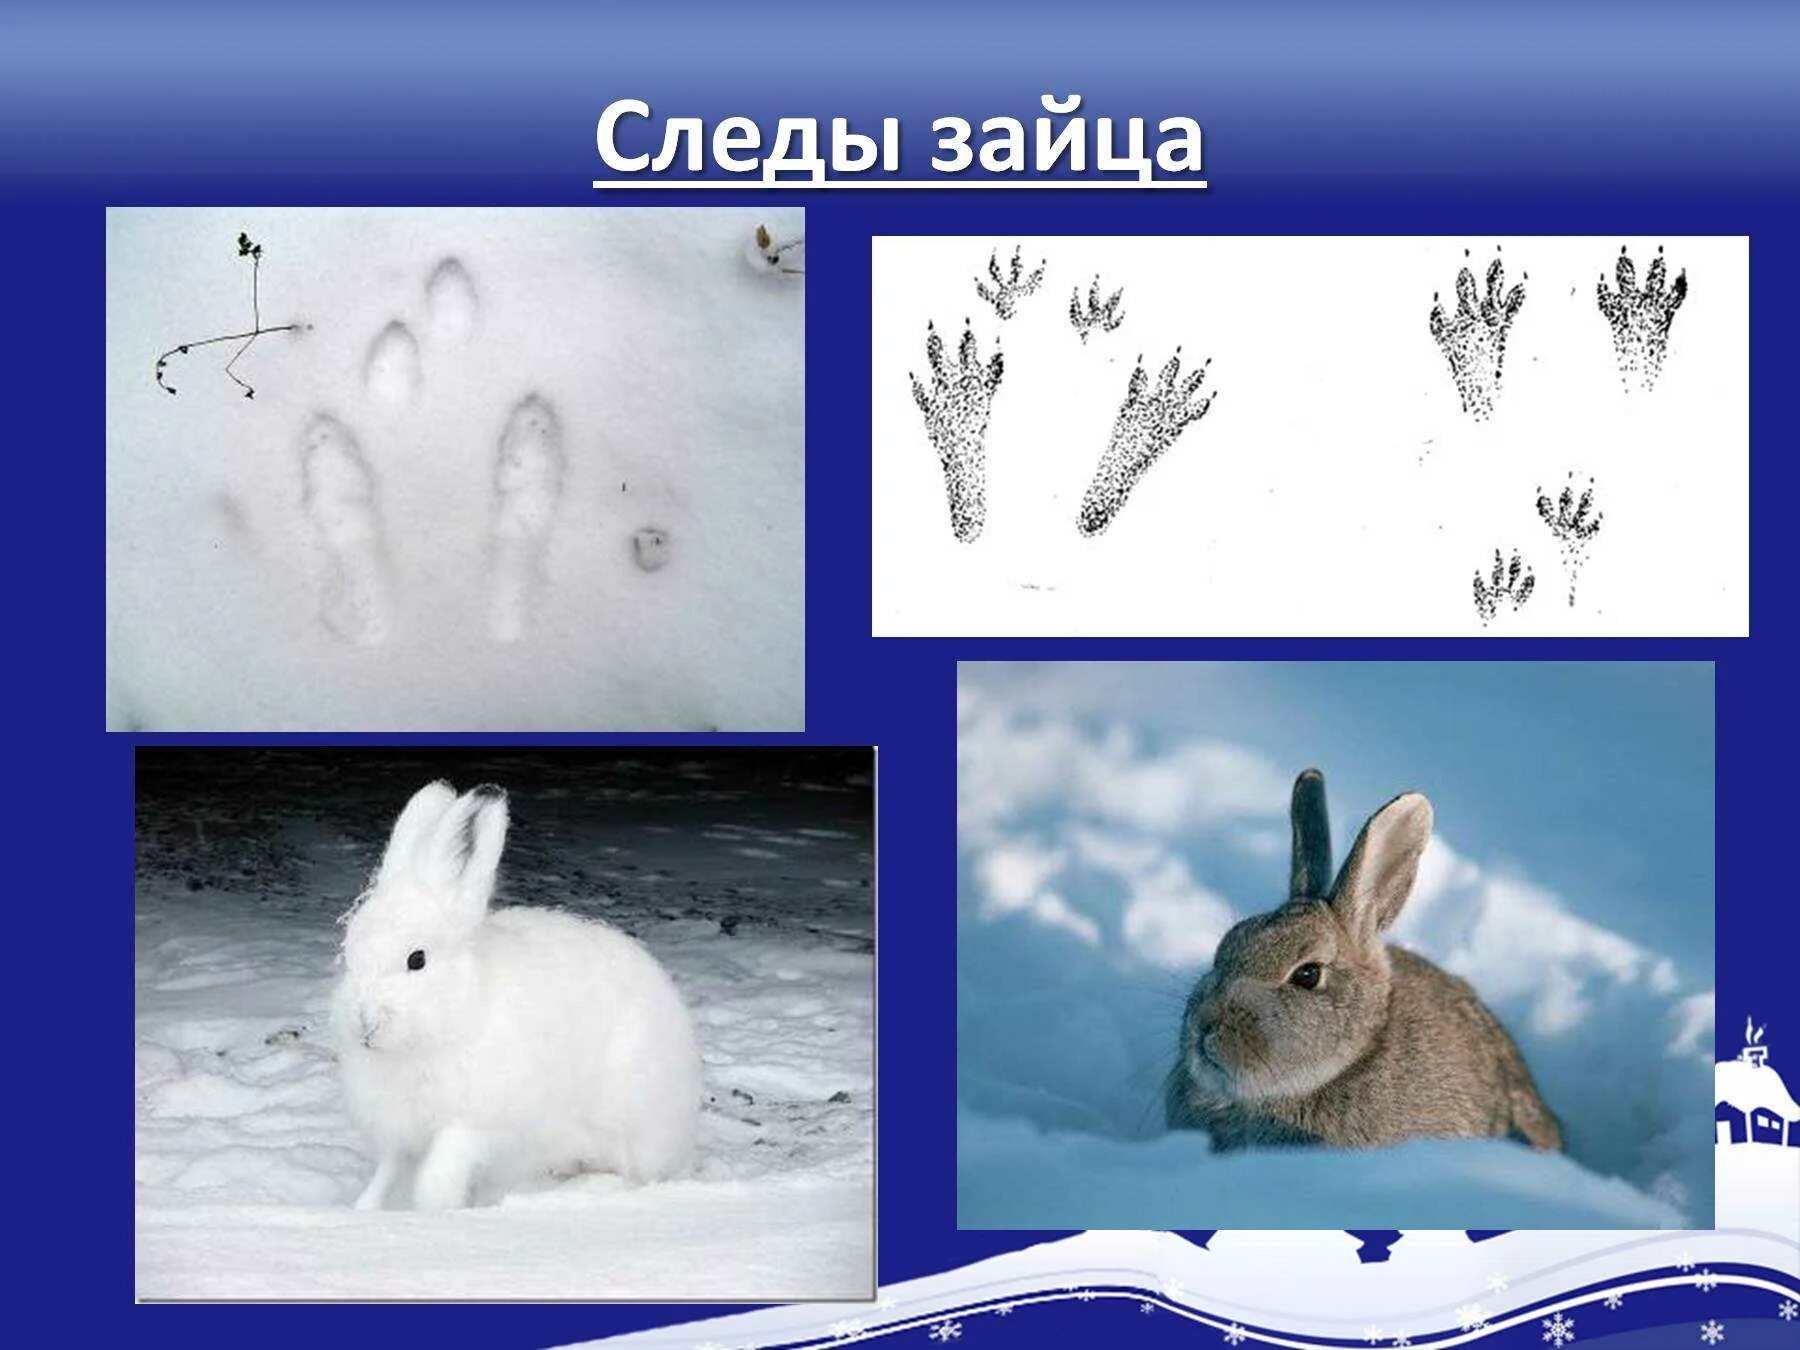 Зайчик пути. Следы зайца беляка и зайца русака. Следы зайца. Следы зайца на снегу. Следы животных на снегу зайца.